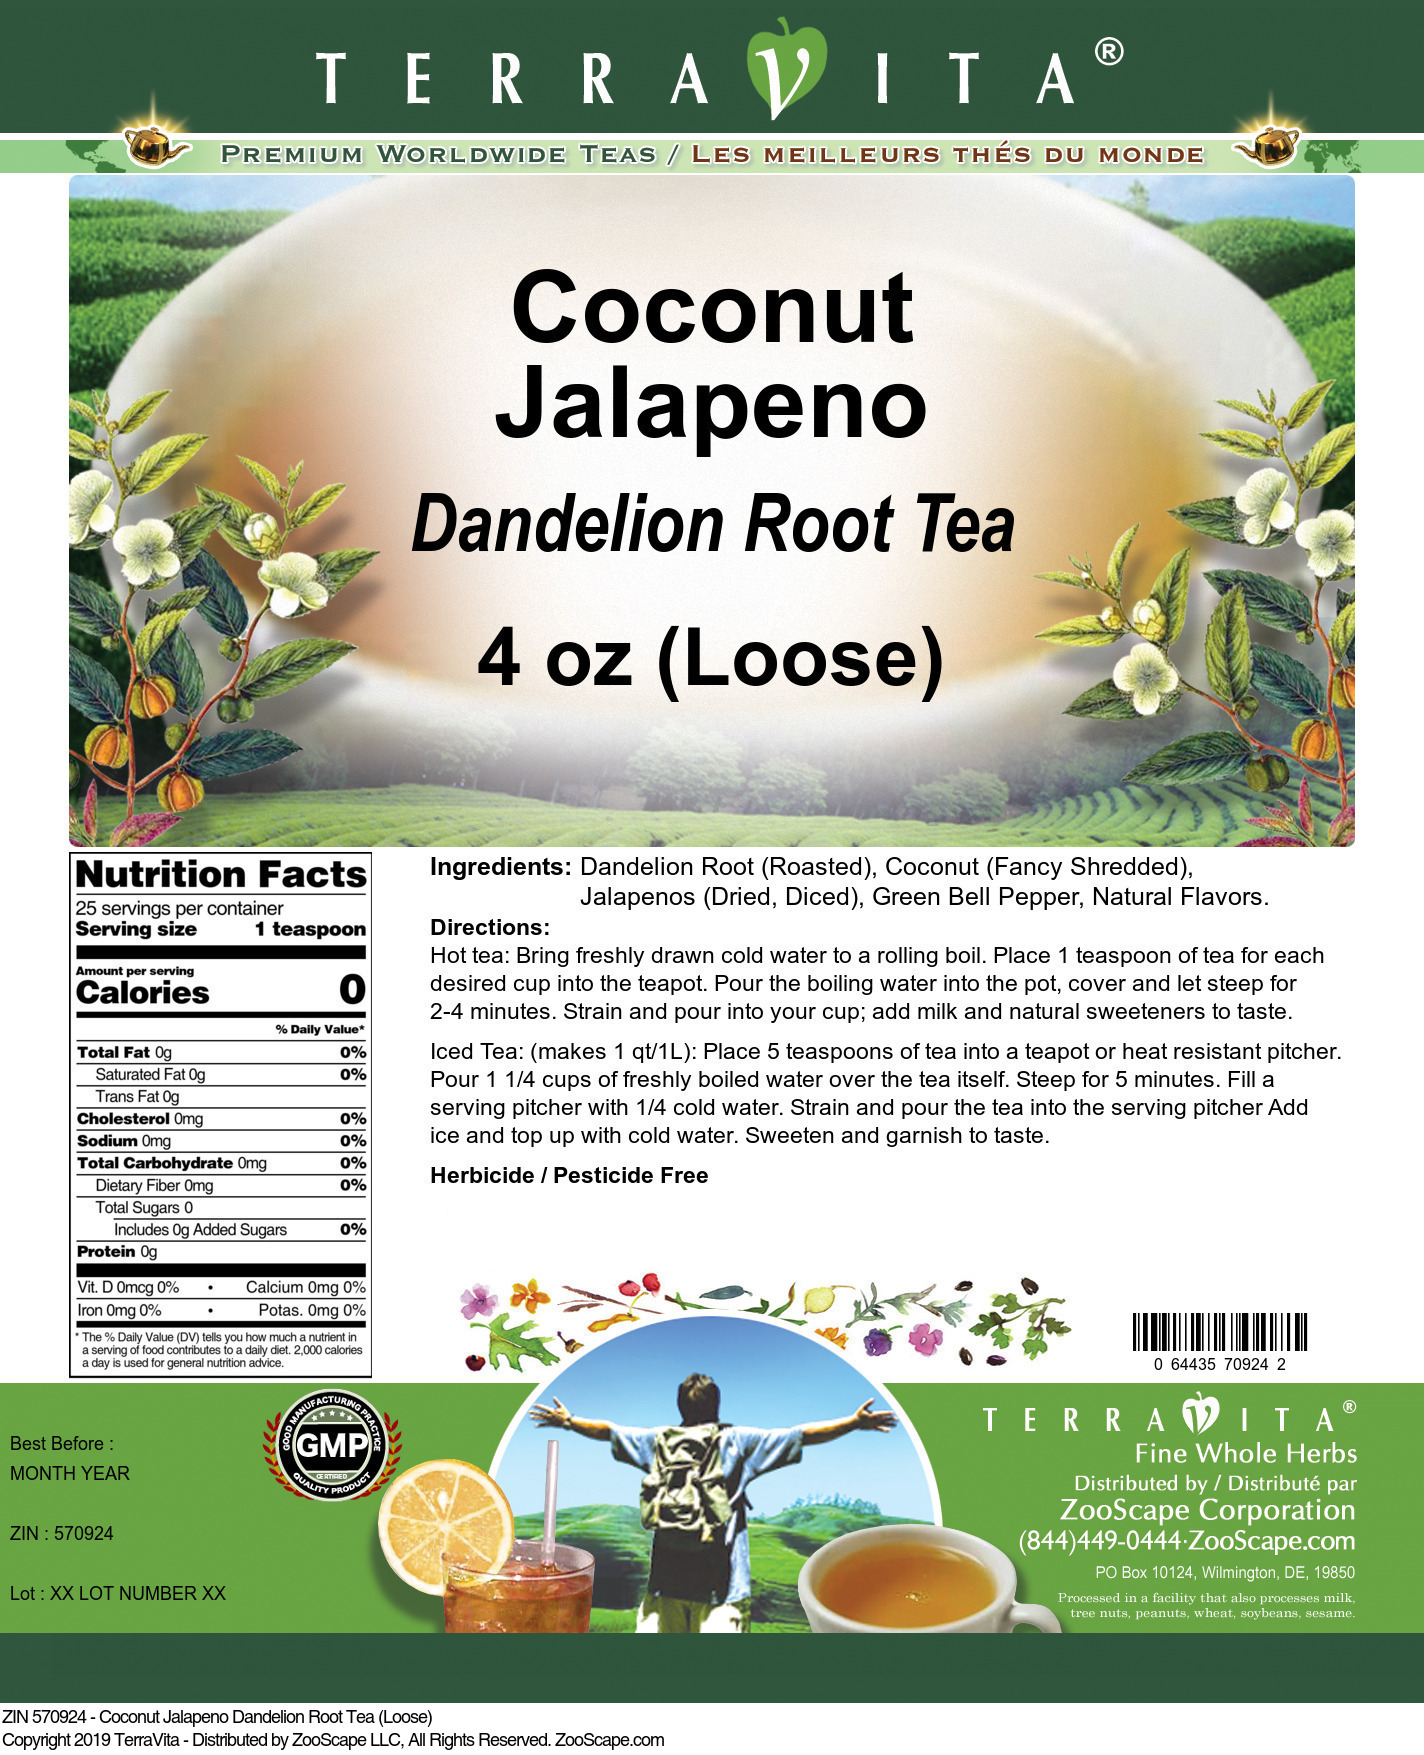 Coconut Jalapeno Dandelion Root Tea (Loose) - Label